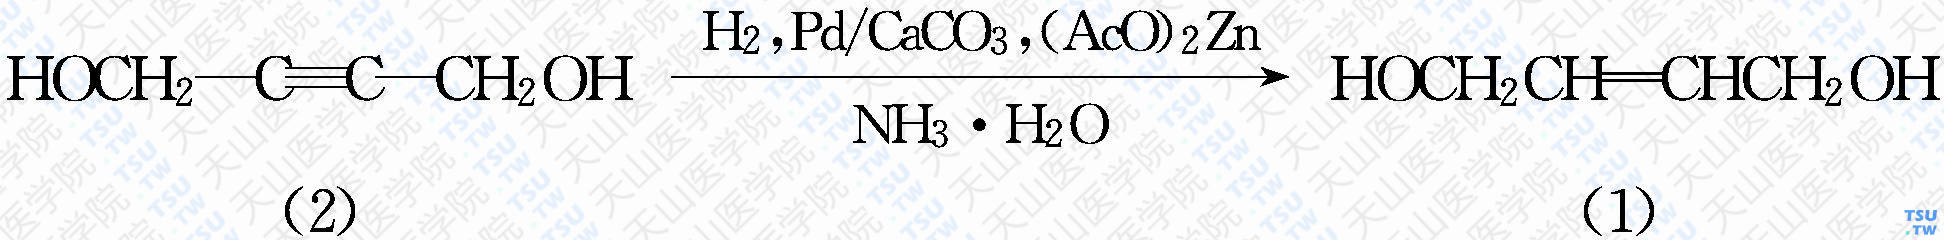 丁-2-烯-1，4-二醇（分子式：C<sub>4</sub>H<sub>8</sub>O<sub>2</sub>）的合成方法路线及其结构式